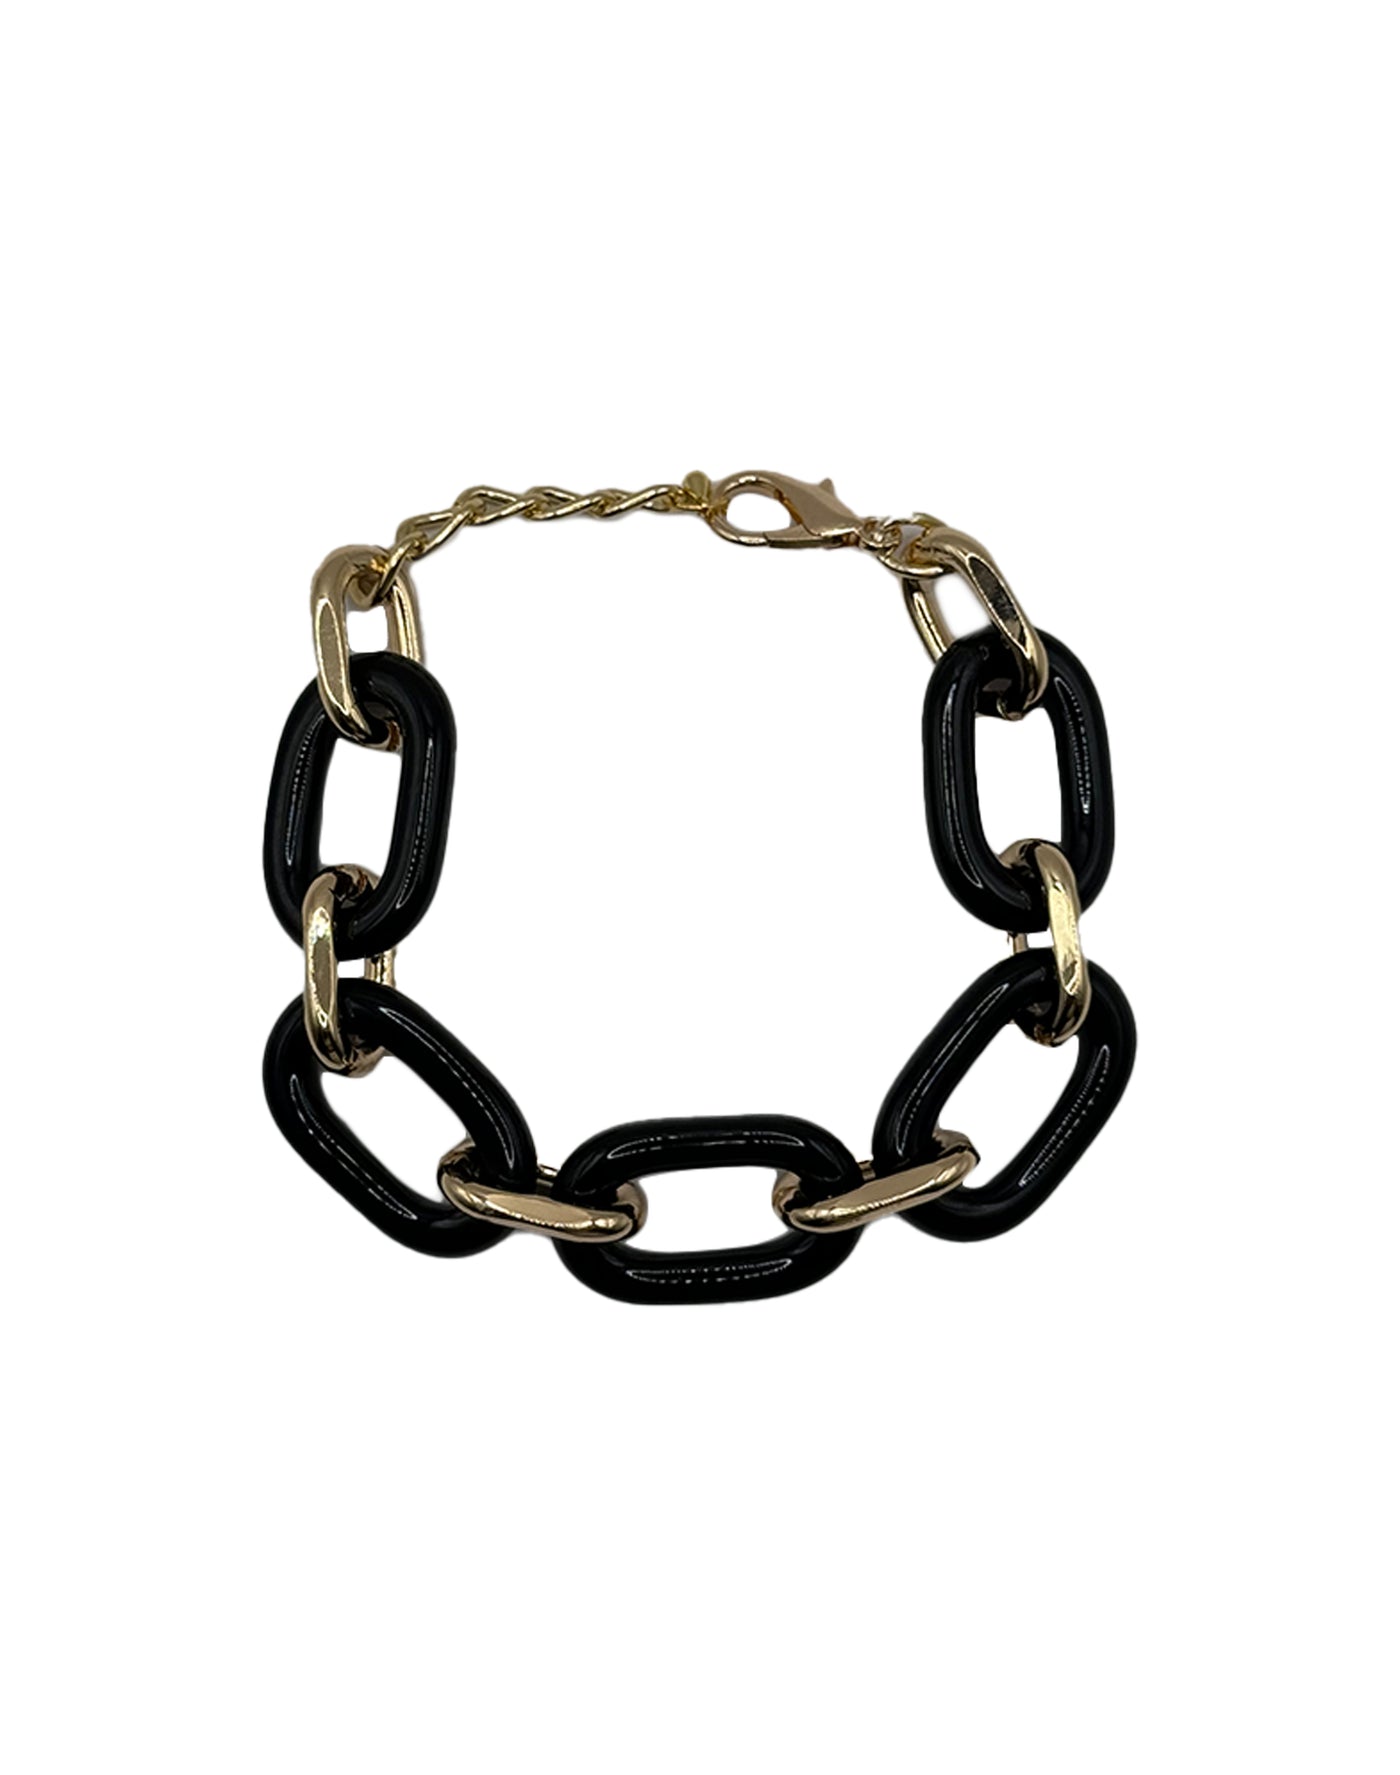 Chain Link Bracelet